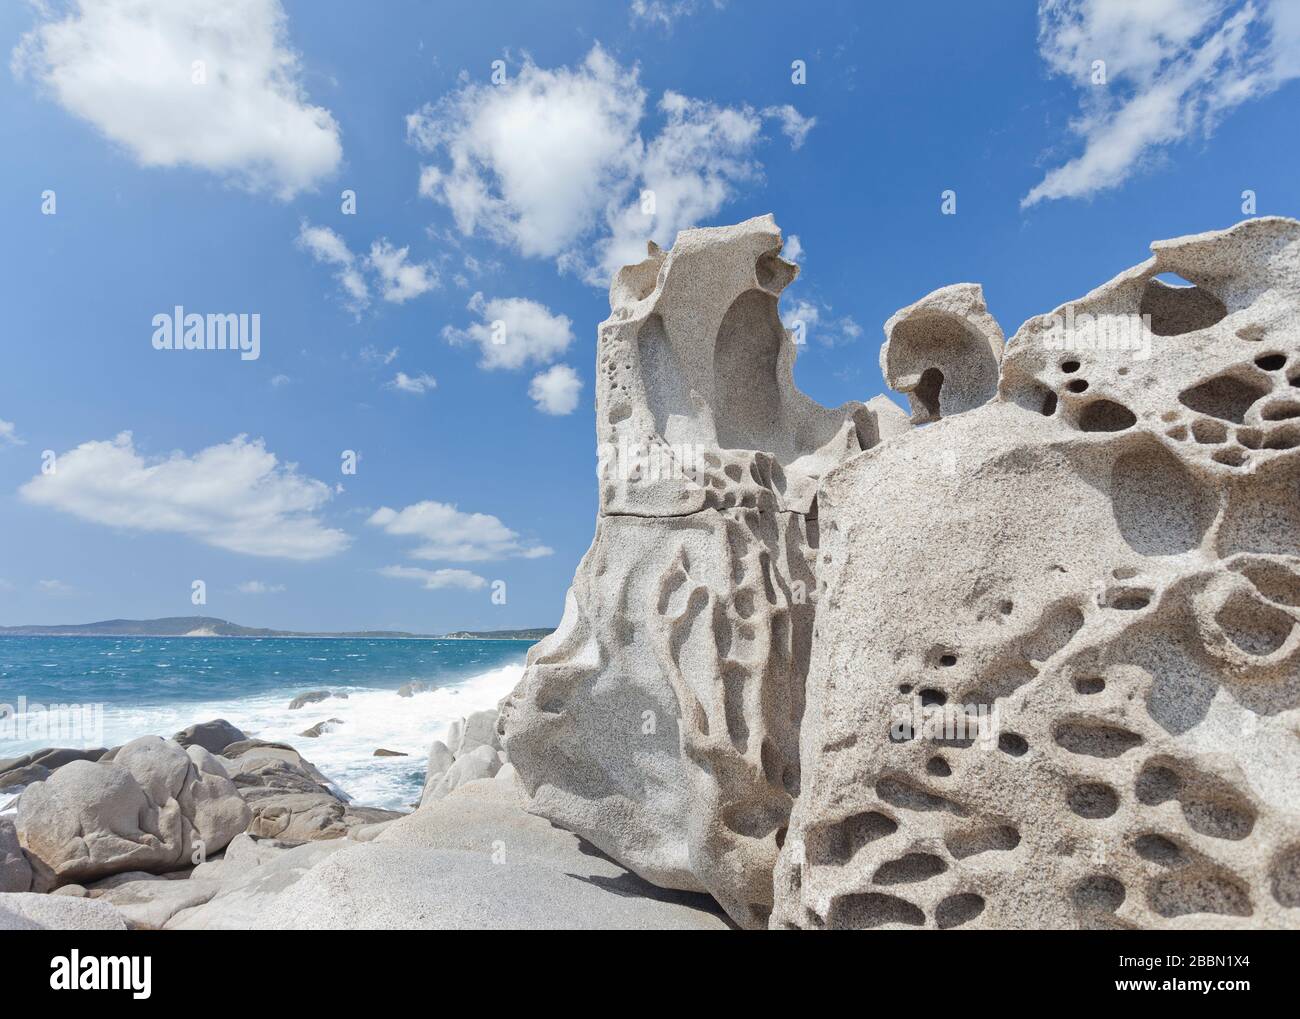 Landscape of Sardinia. Eroded granite rocks. Italy Stock Photo